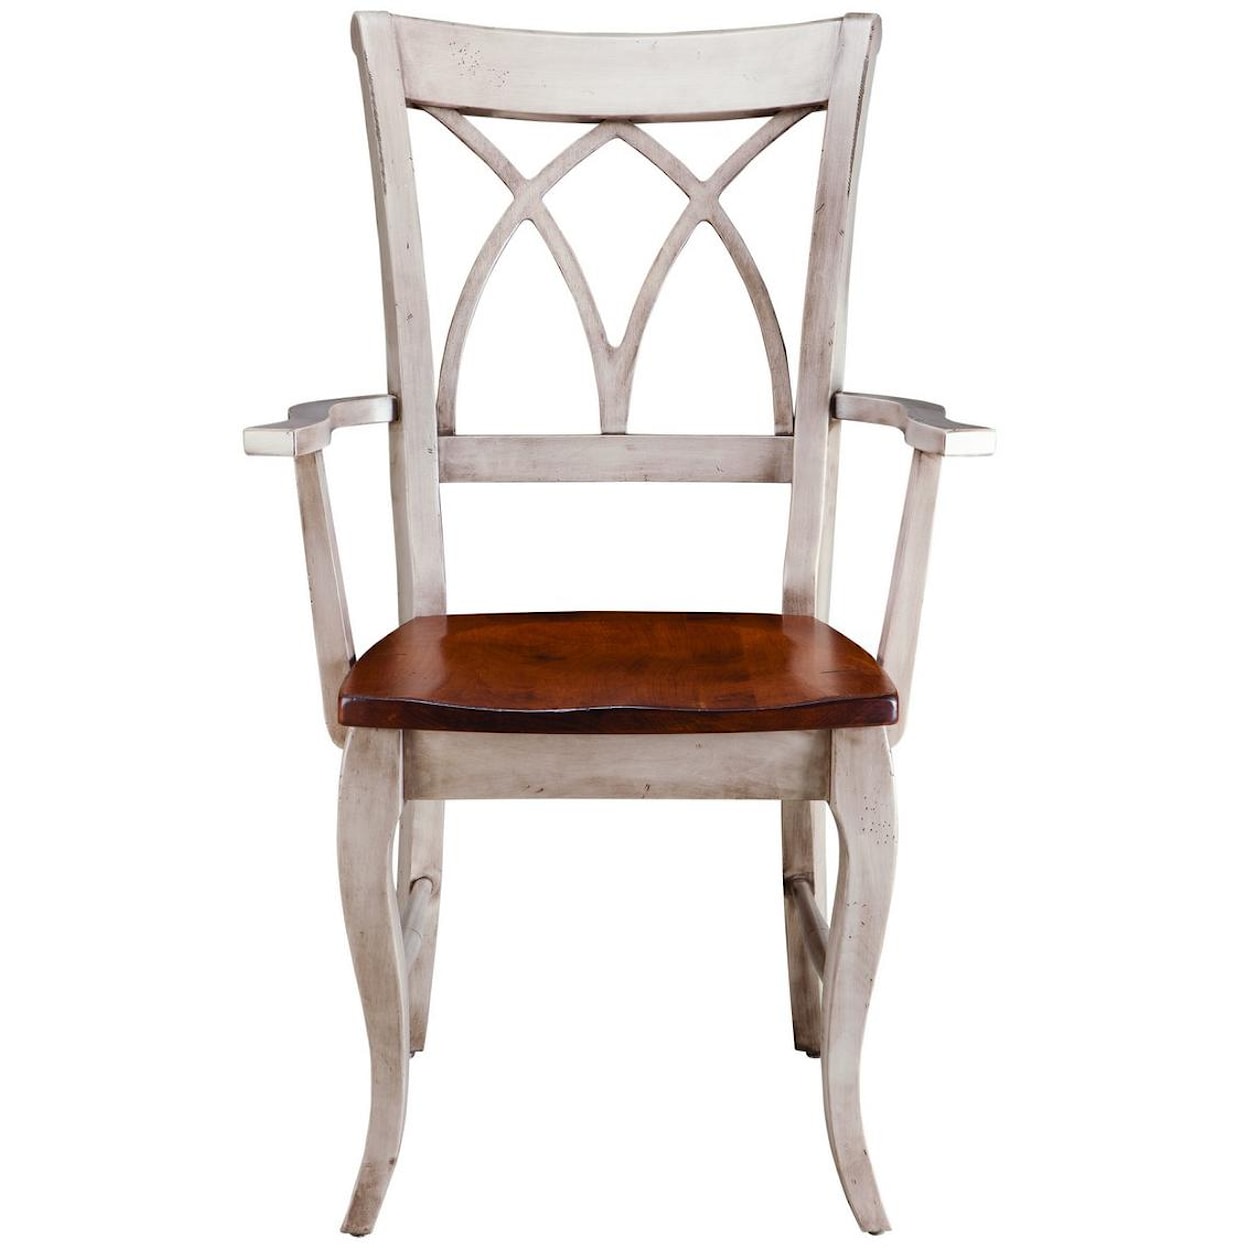 Mavin Adams Customizable Chair